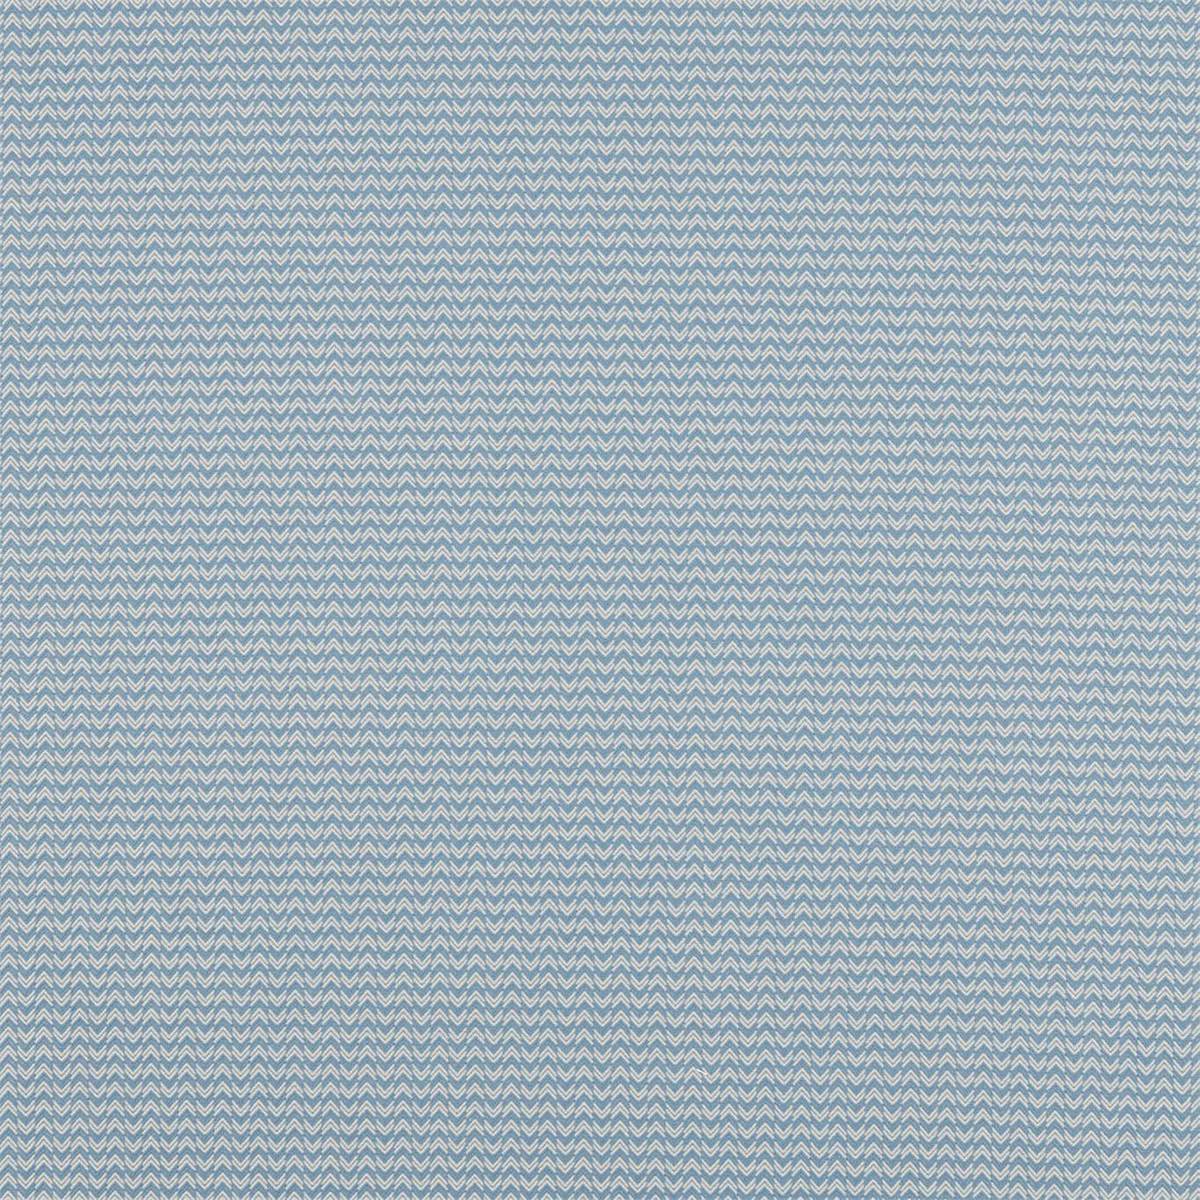 Herring Marine Fabric by Sanderson